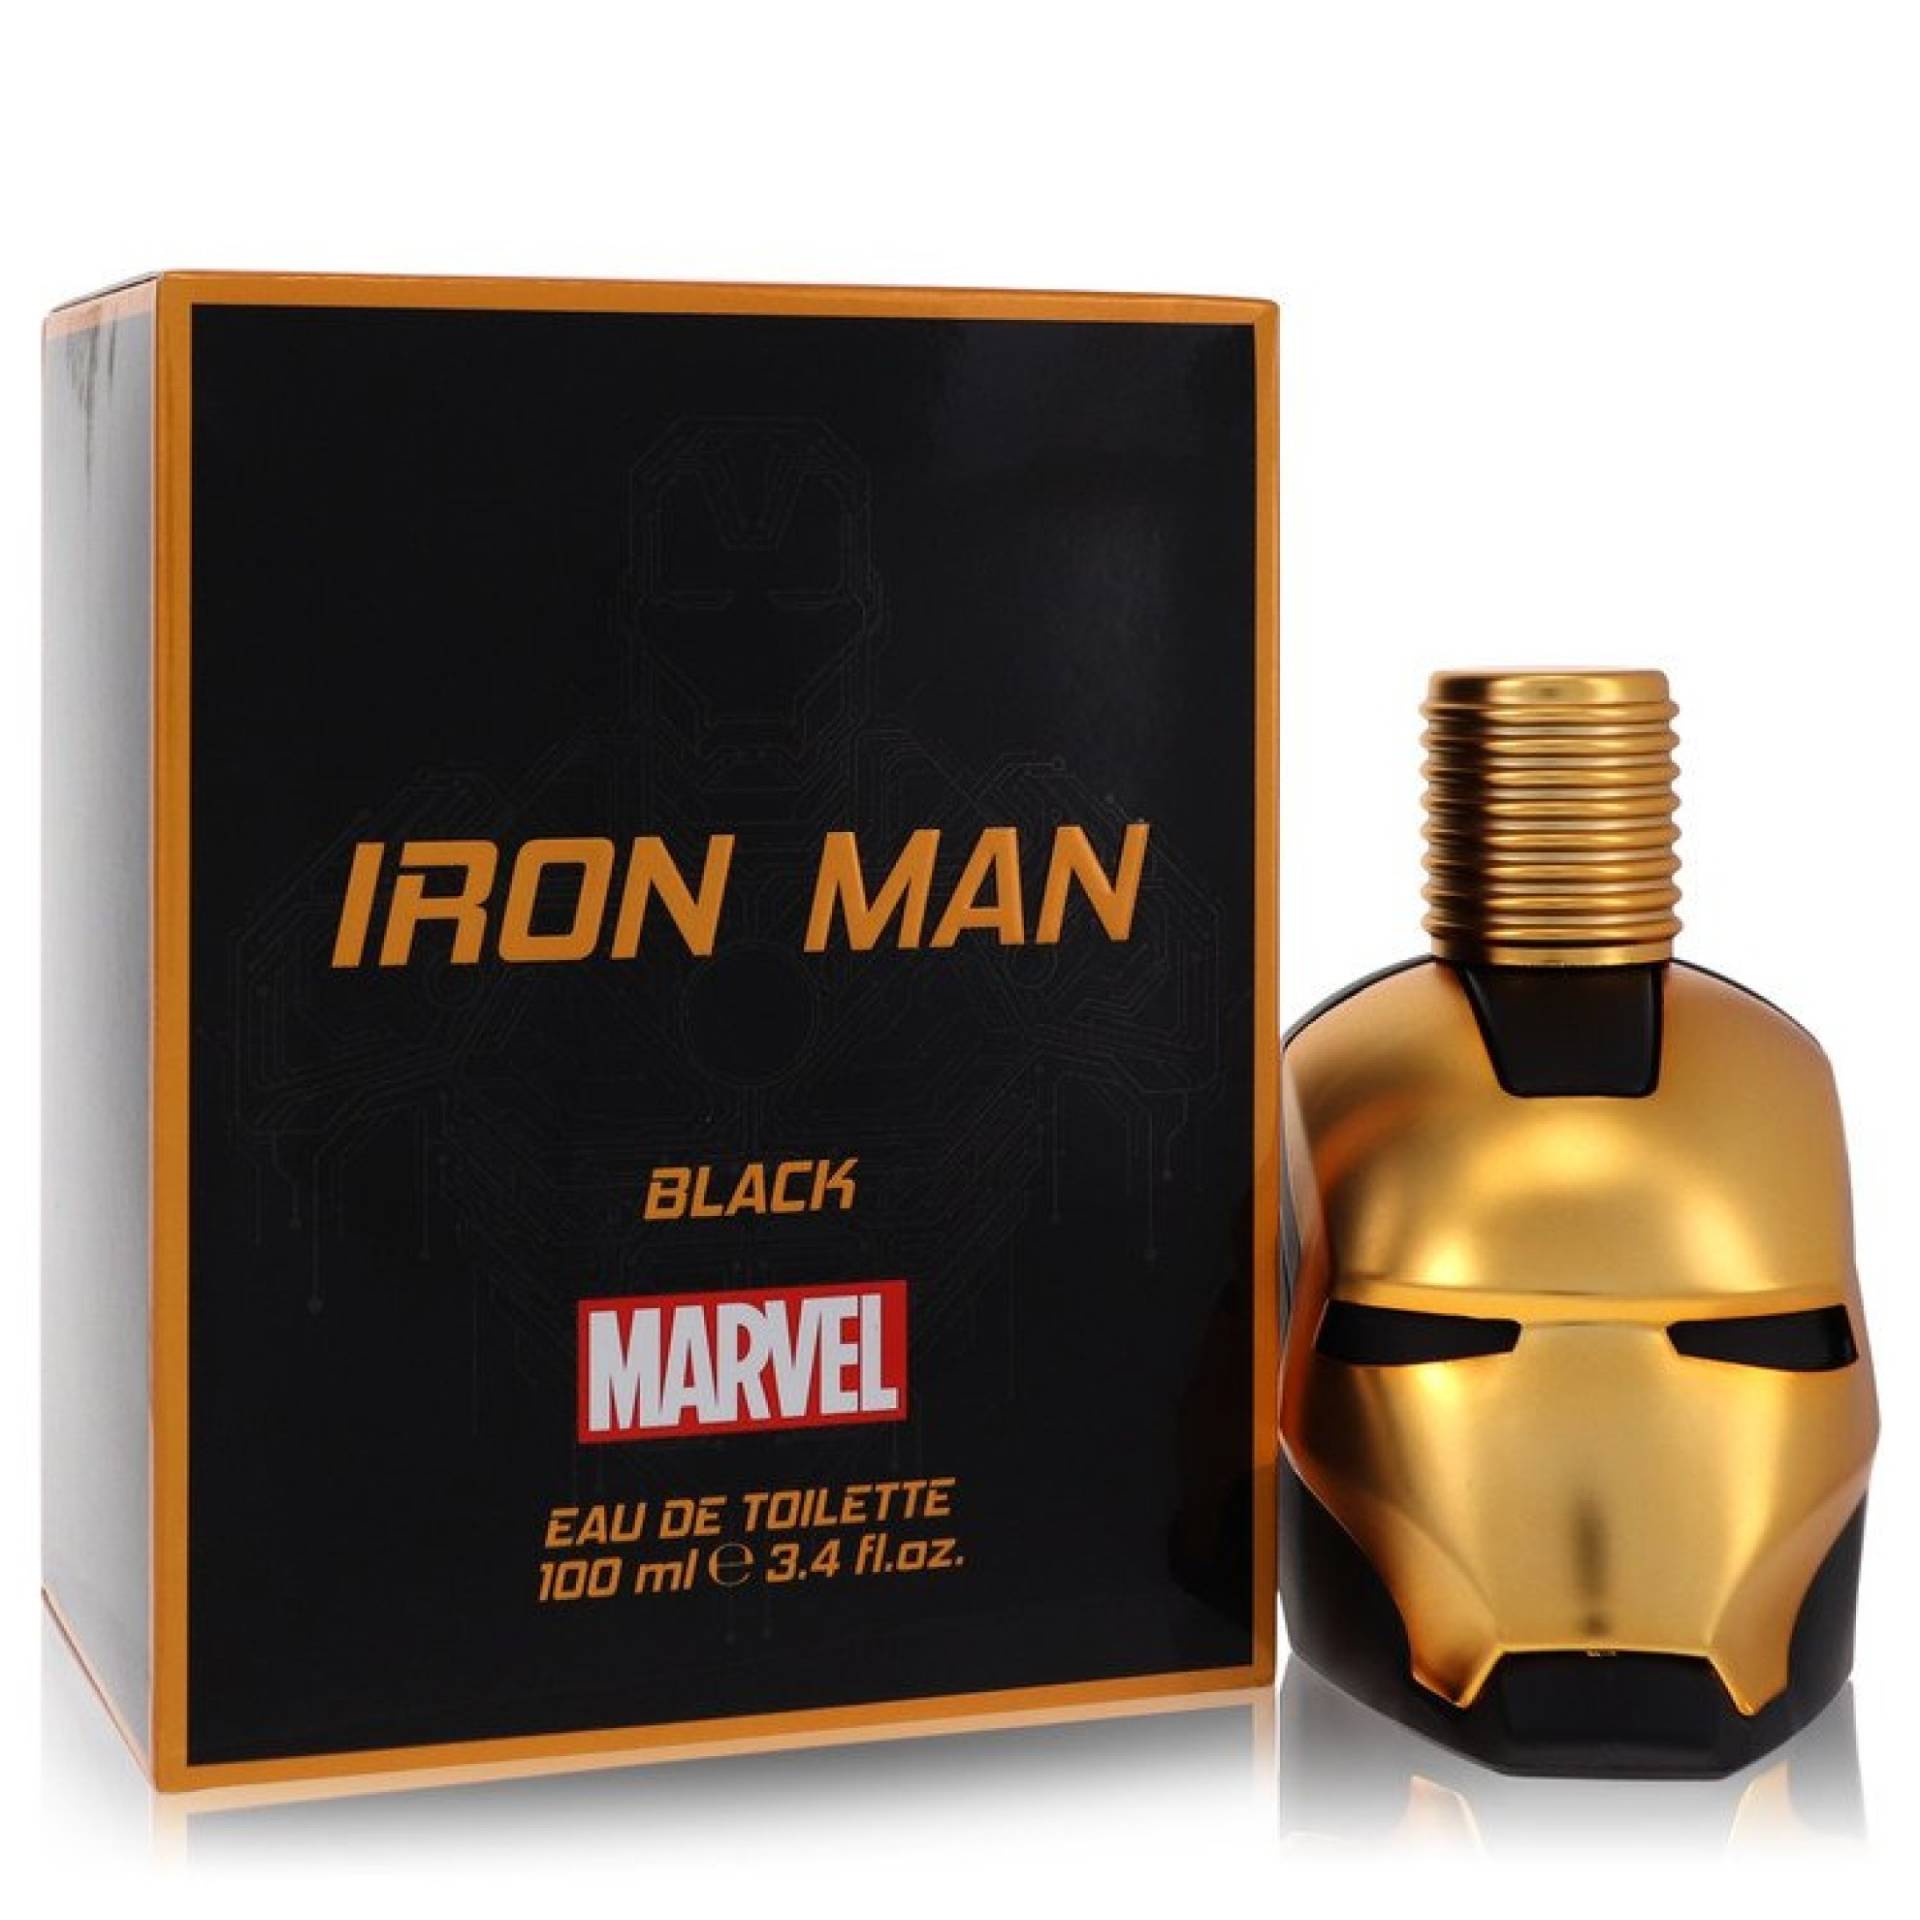 Marvel Iron Man Black Eau De Toilette Spray 100 ml von Marvel